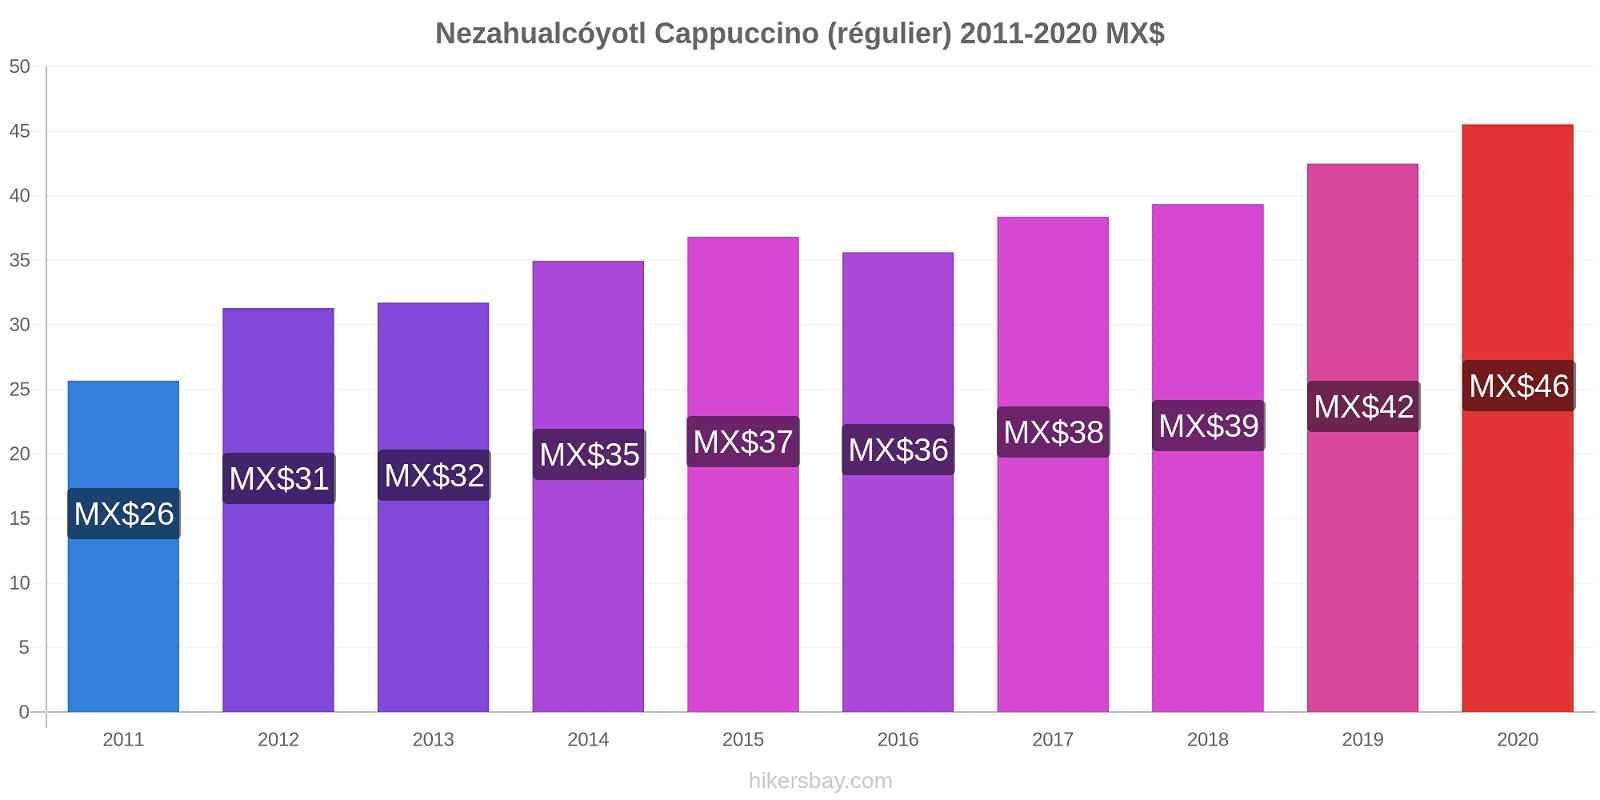 Nezahualcóyotl changements de prix Cappuccino (régulier) hikersbay.com